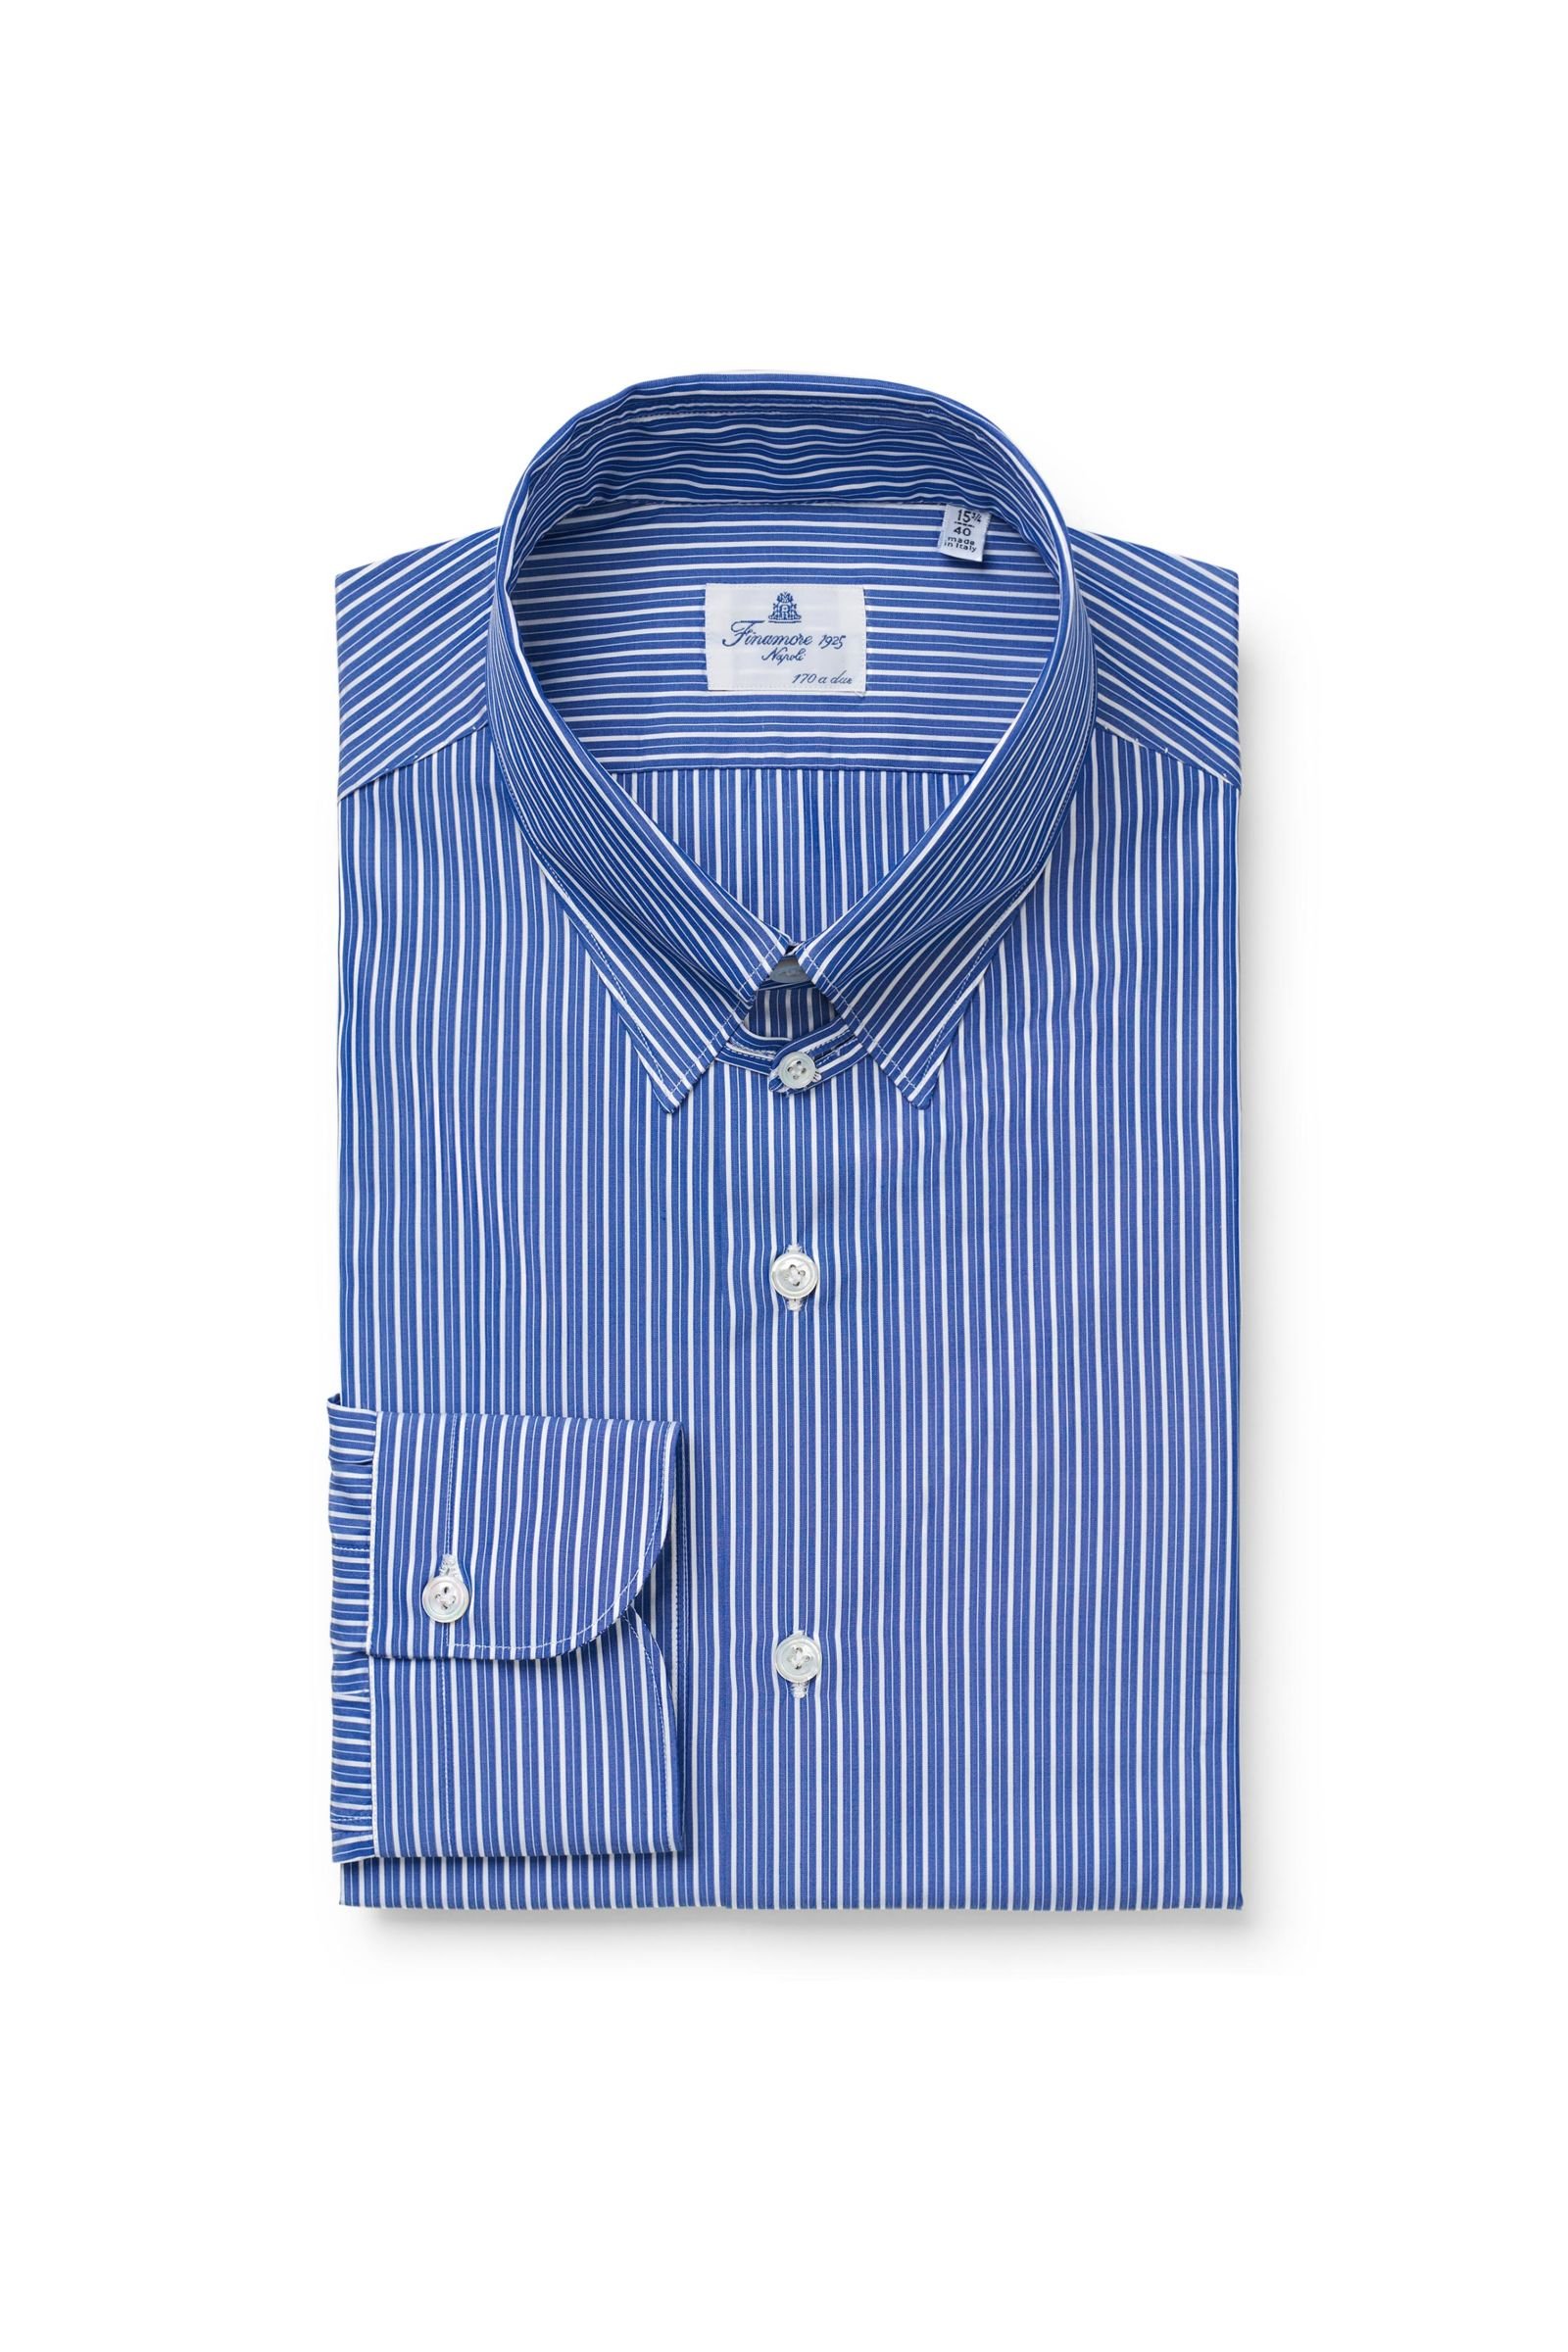 Business shirt 'Augusto Milano' English collar blue striped